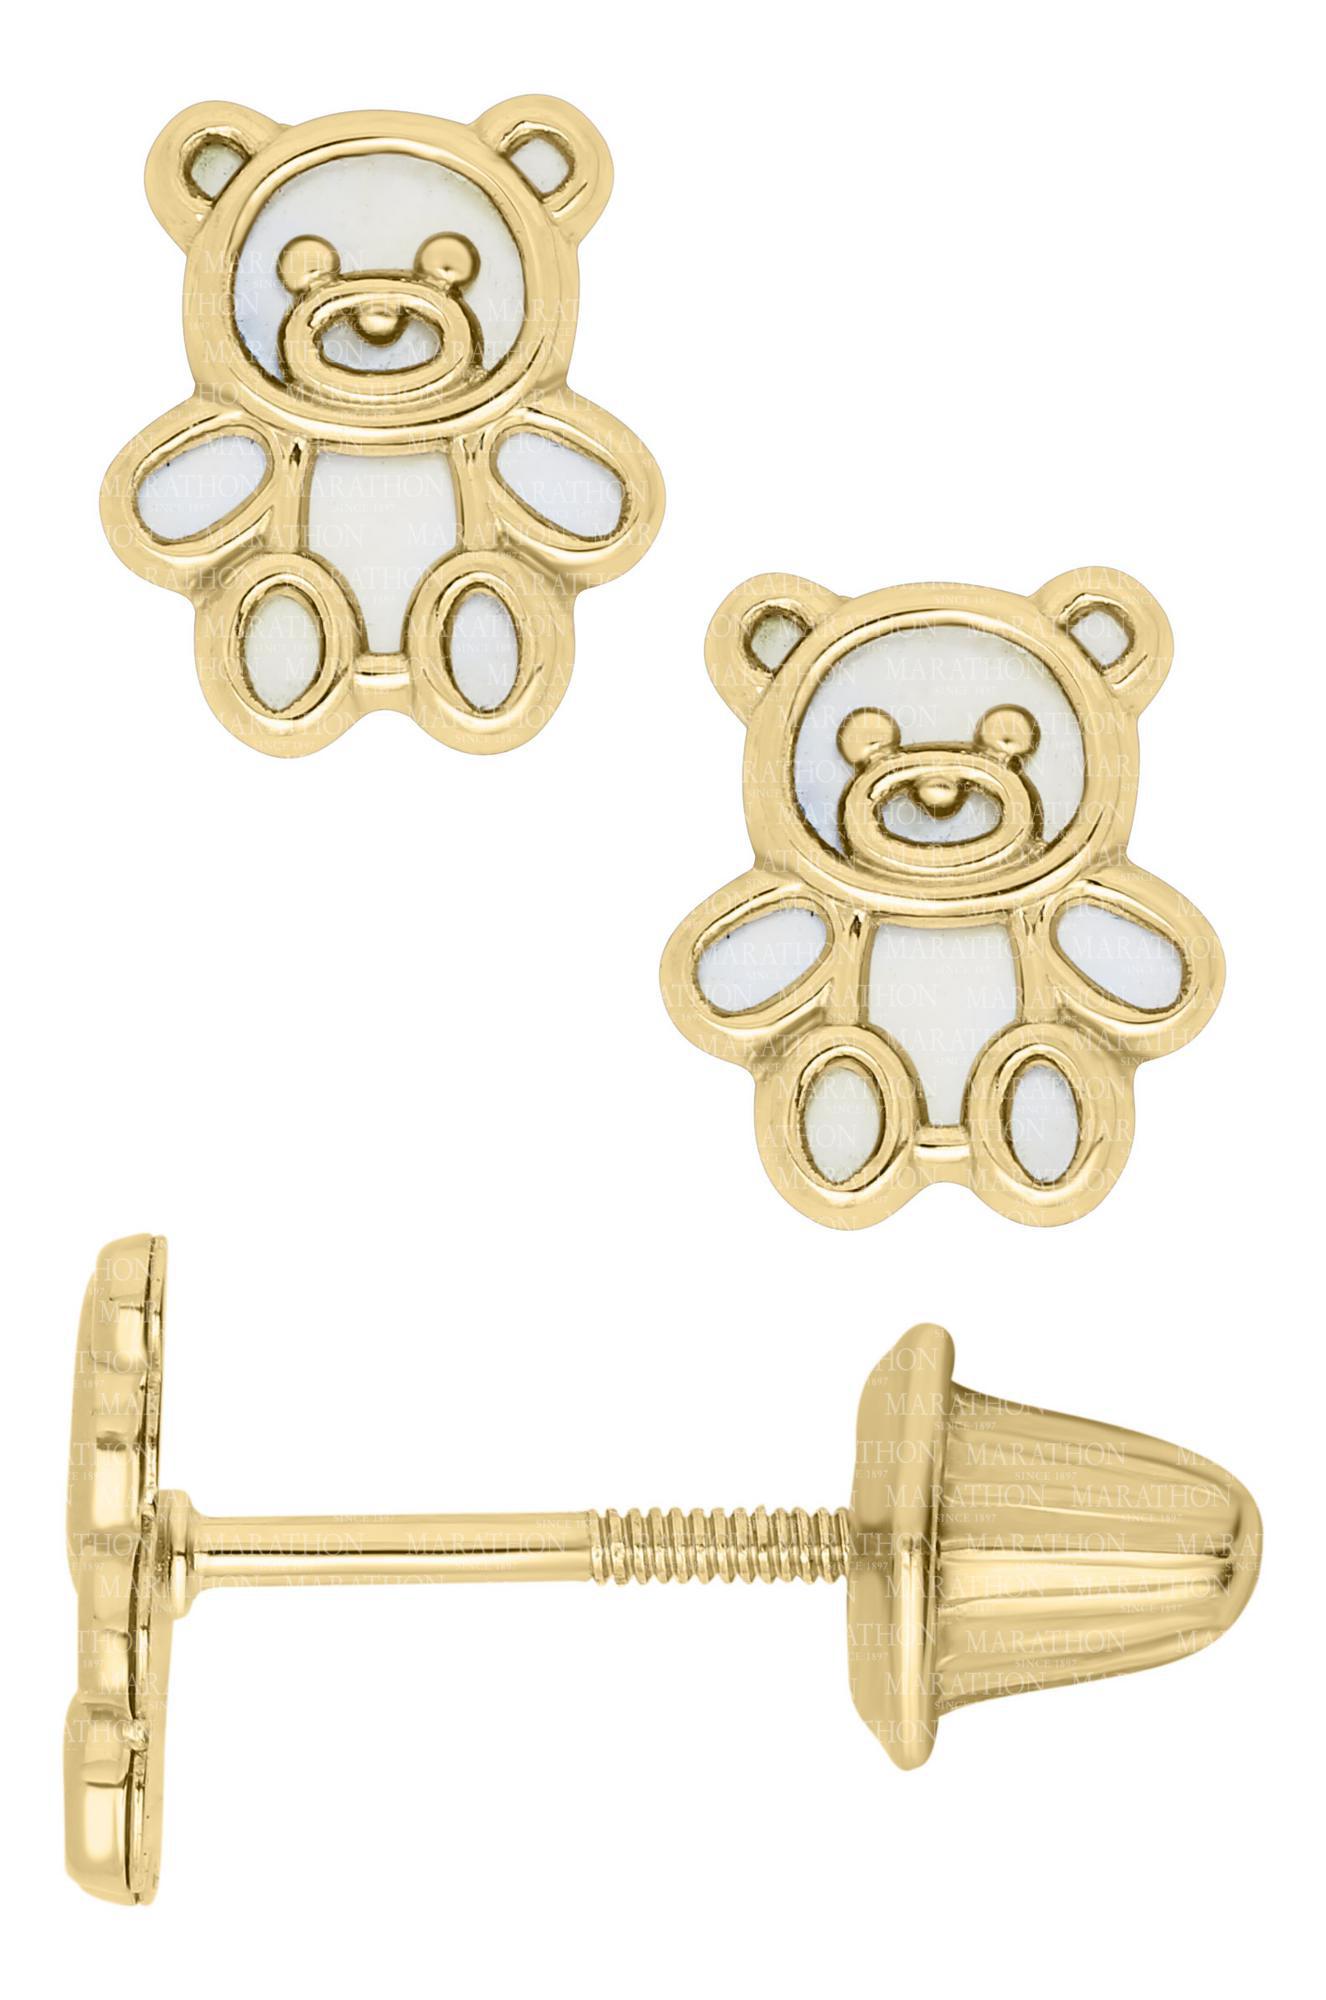 Kiddie Kraft 14 Karat Yellow Gold Teddy Bear Mother Of Pearl Earrings With Threaded Posts